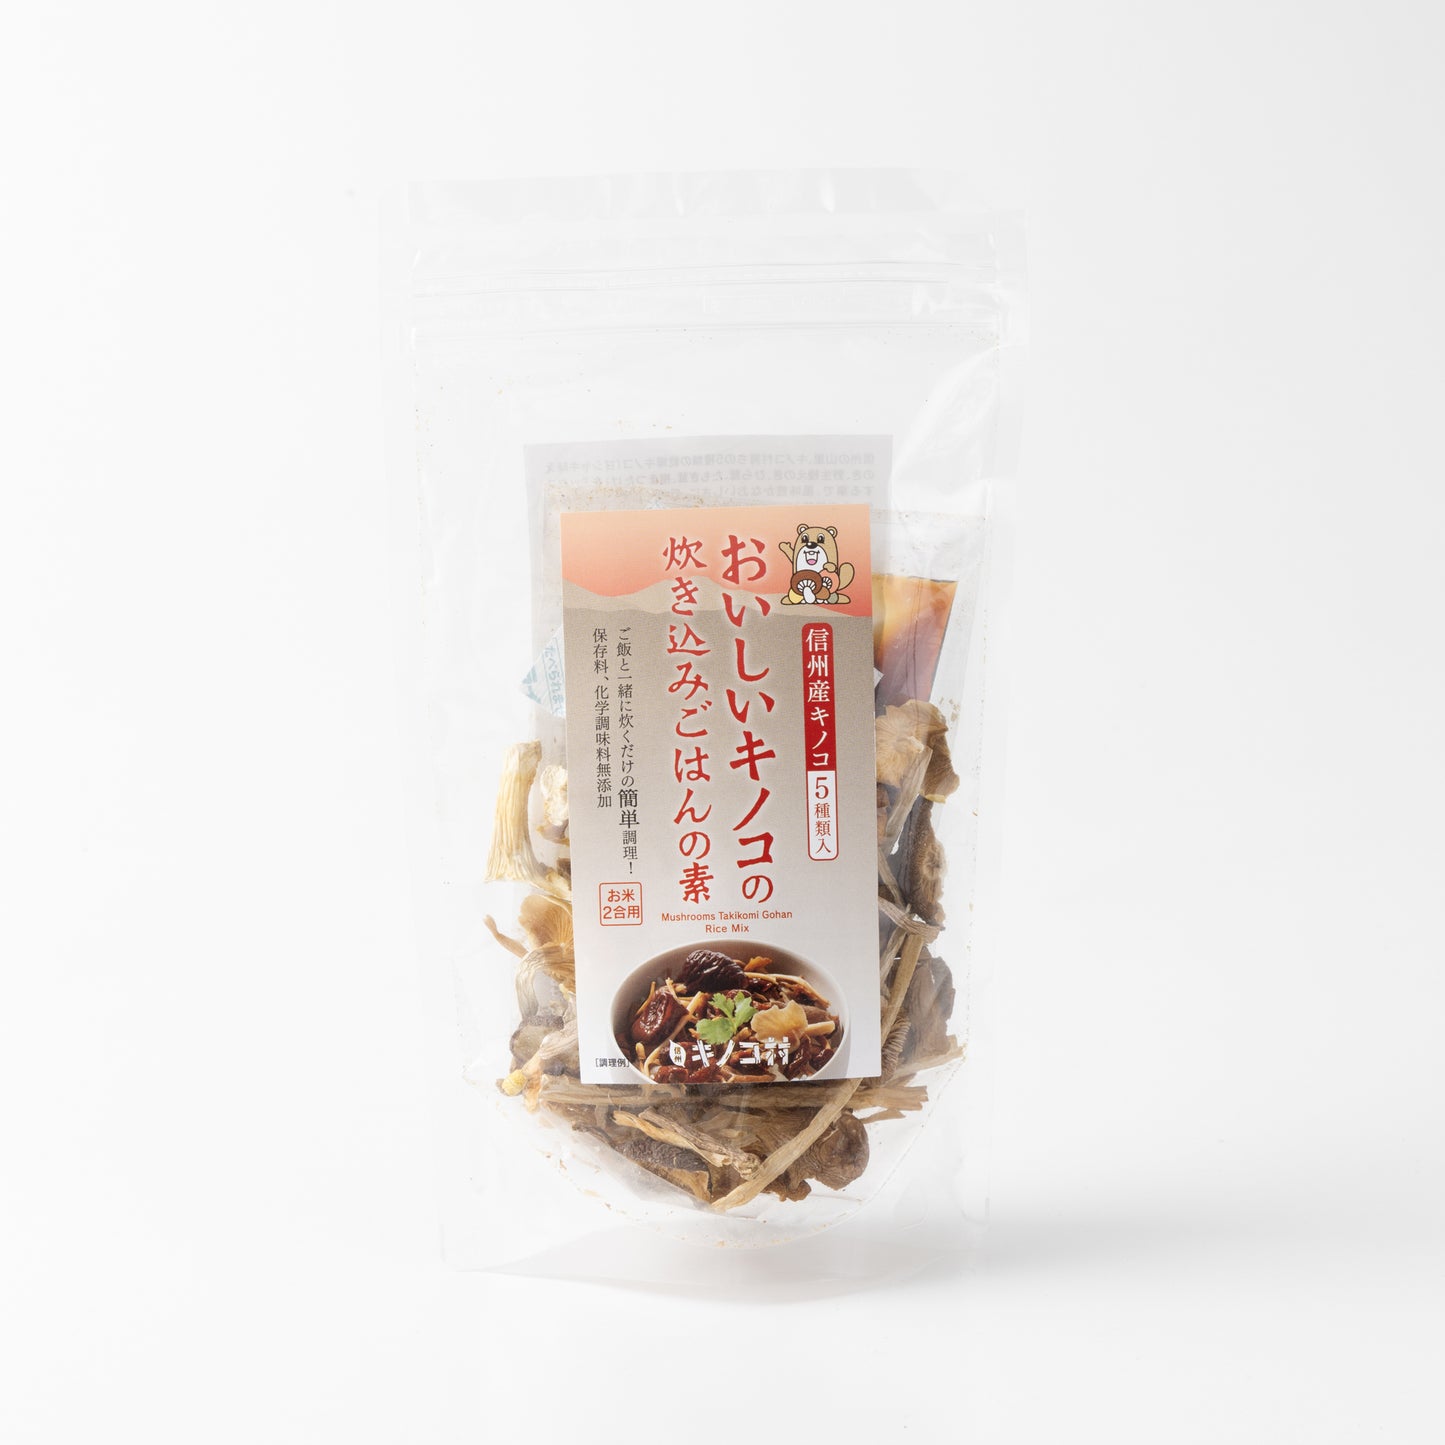 Pre-mix seasonings for Mushroom Takikomi Gohan, Mixed Rice